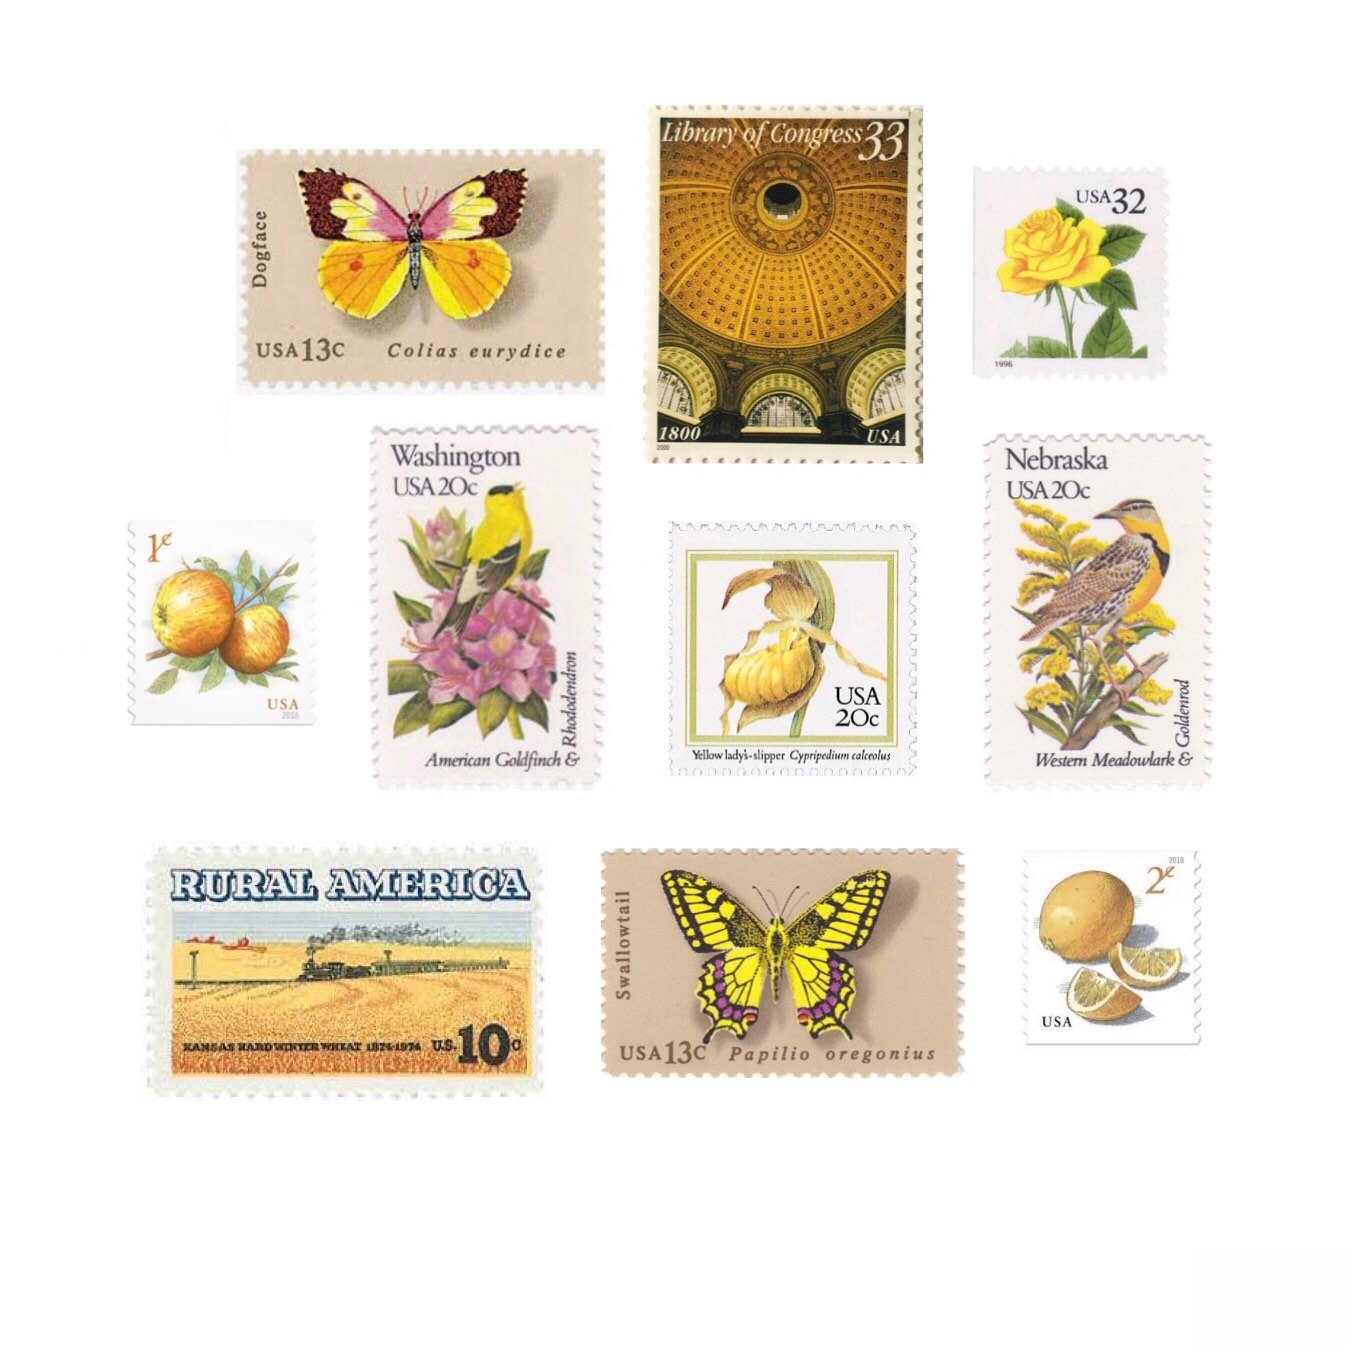 10 Vintage Blue Botanical Stamps Unused Blue Floral Postage // Periwinkle  Blue Wild Flax Flower Stamps for Mailing